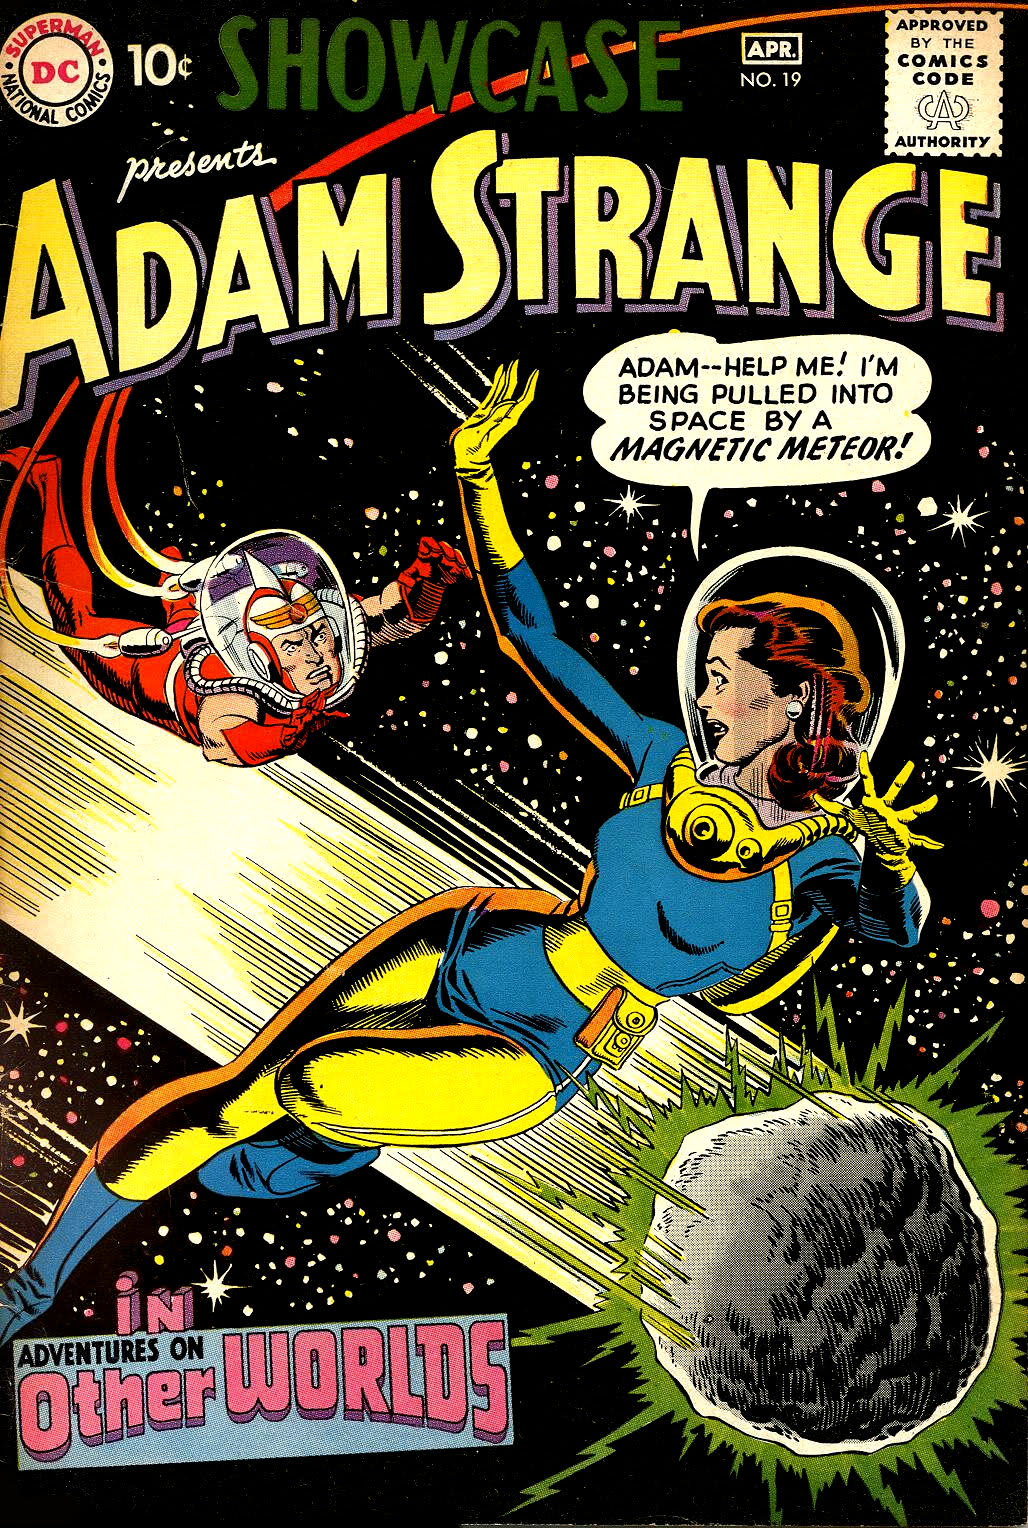 Adam Strange #6